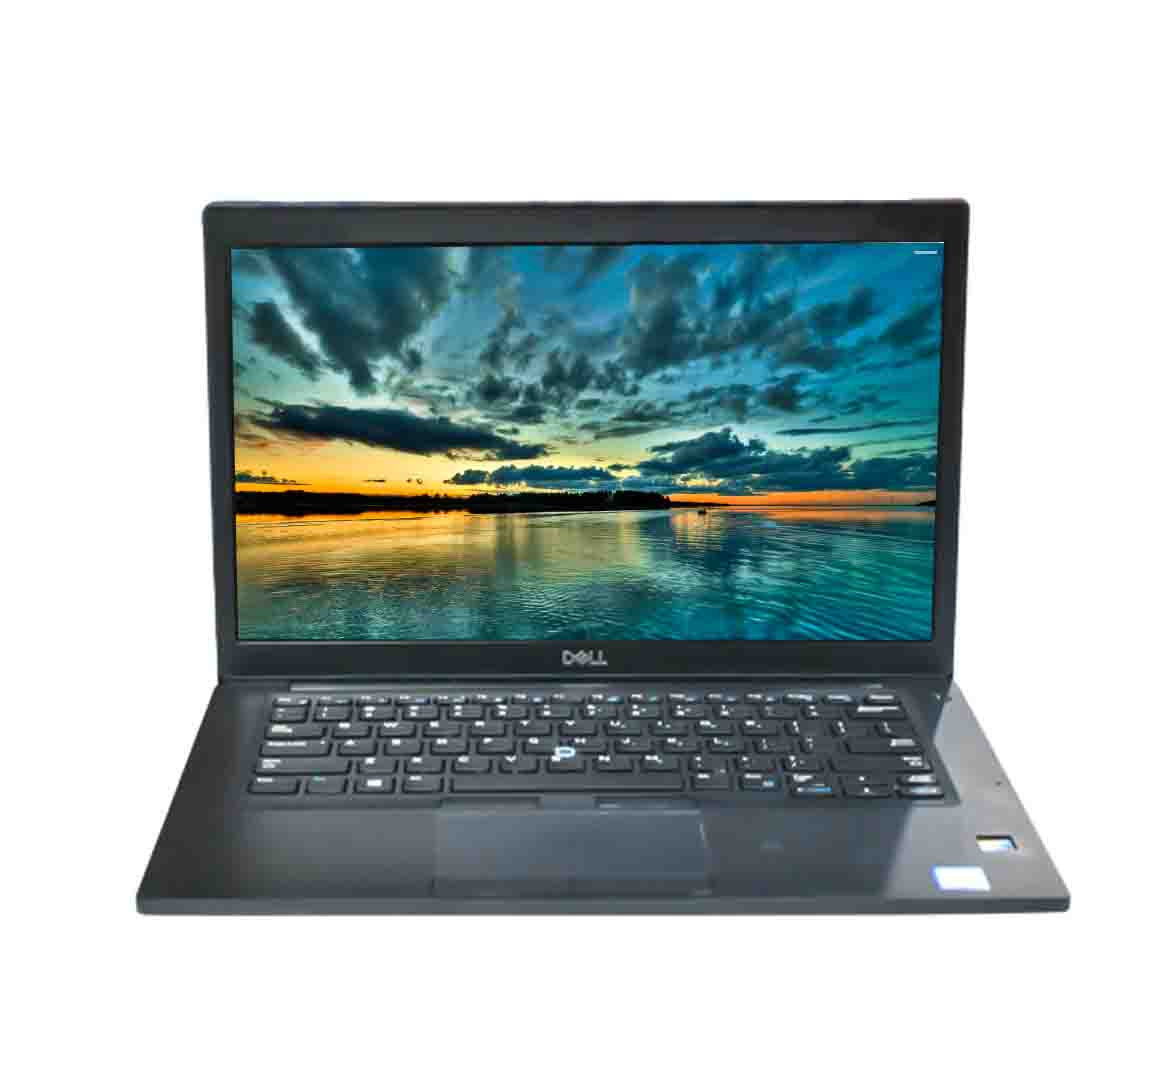 Dell Latitude 7490 Business Laptop, Intel Core i5-7th Gen CPU, 8GB RAM, 256GB SSD, 14.1 inch Display, Windows 10 Pro, Refurbished Laptop